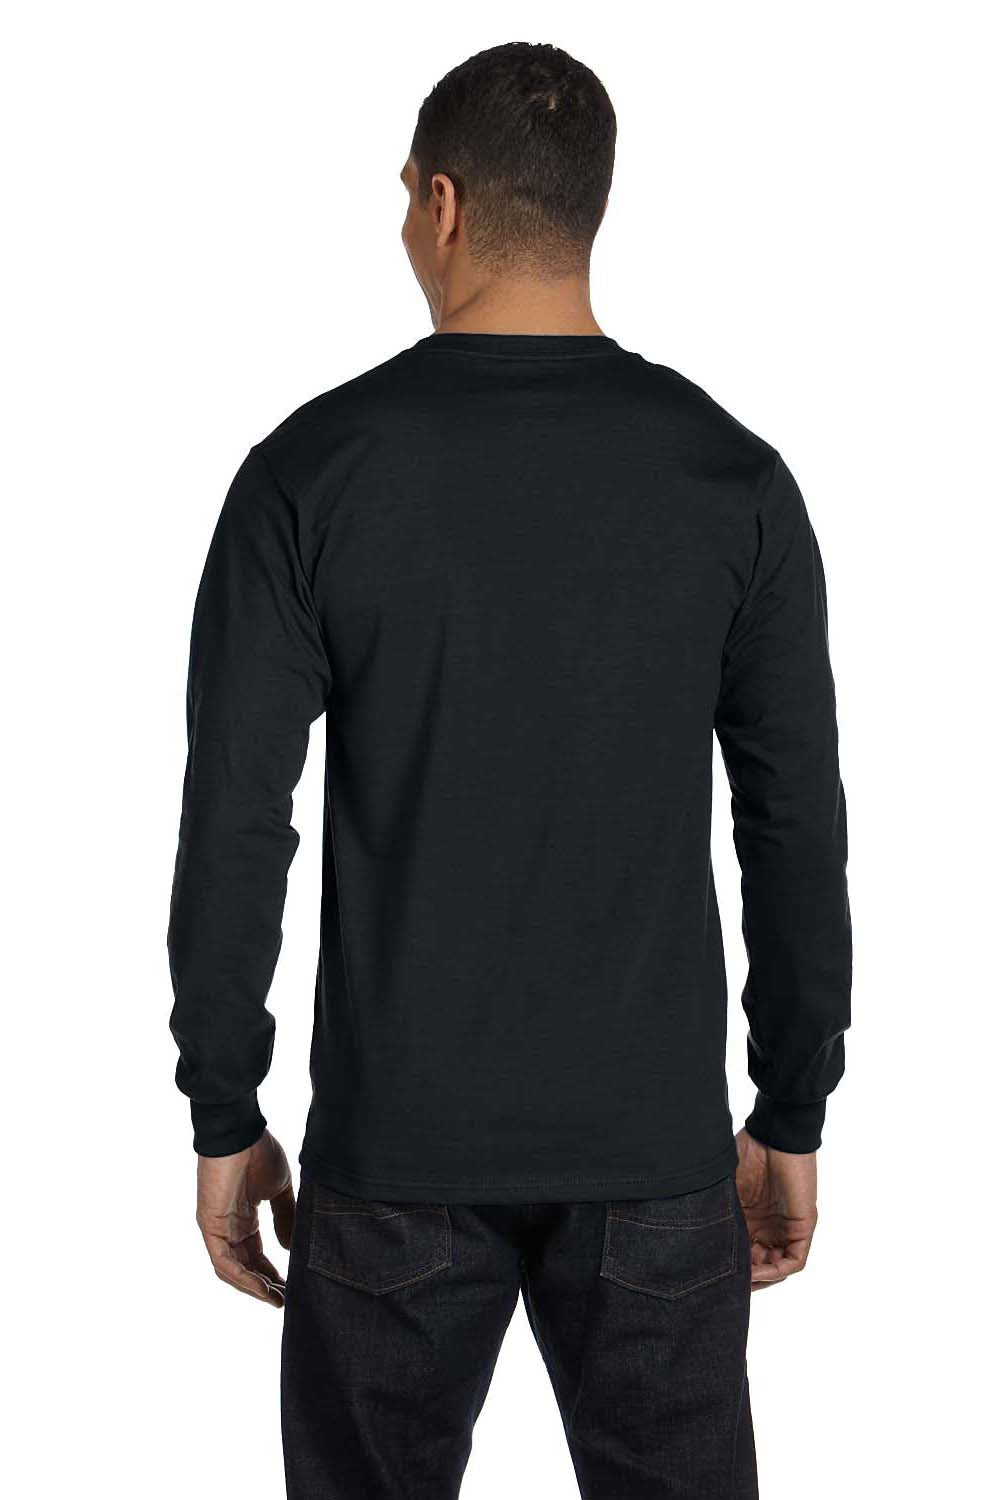 Hanes 5186 Mens Beefy-T Long Sleeve Crewneck T-Shirt Black Back